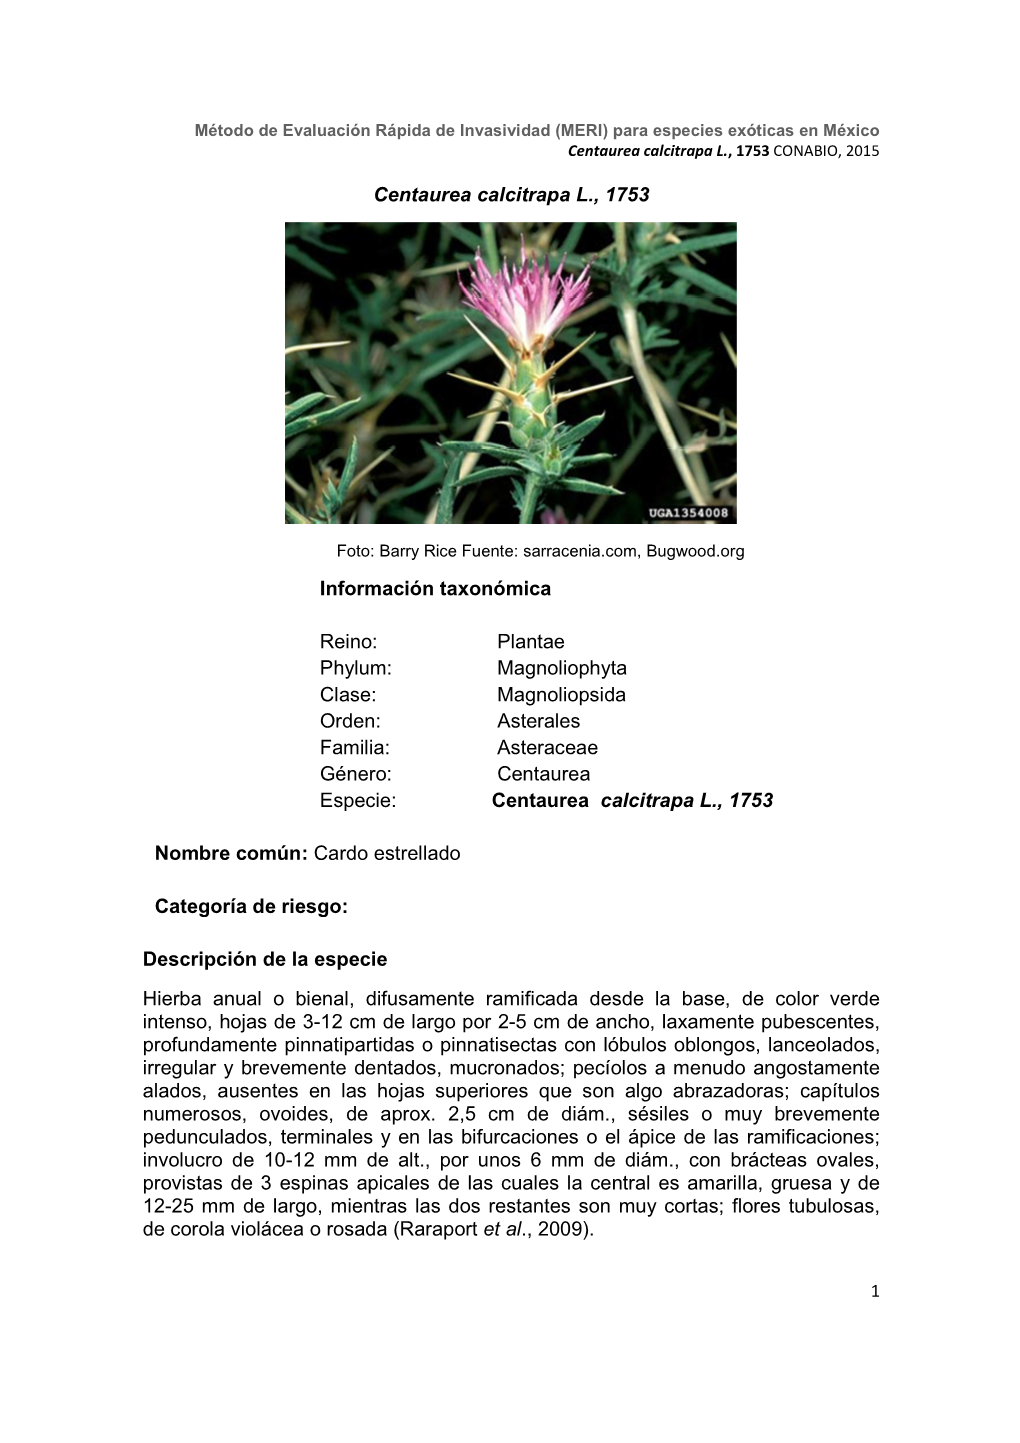 Centaurea Calcitrapa L